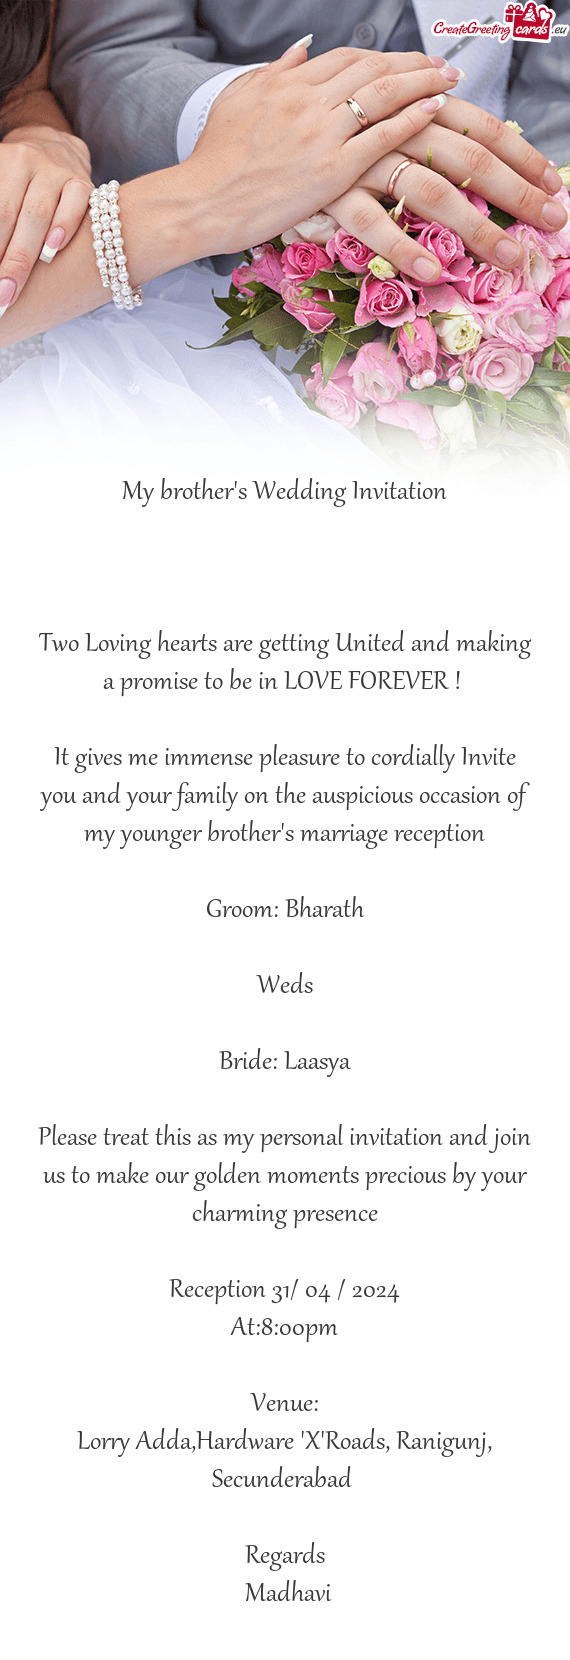 Bride: Laasya